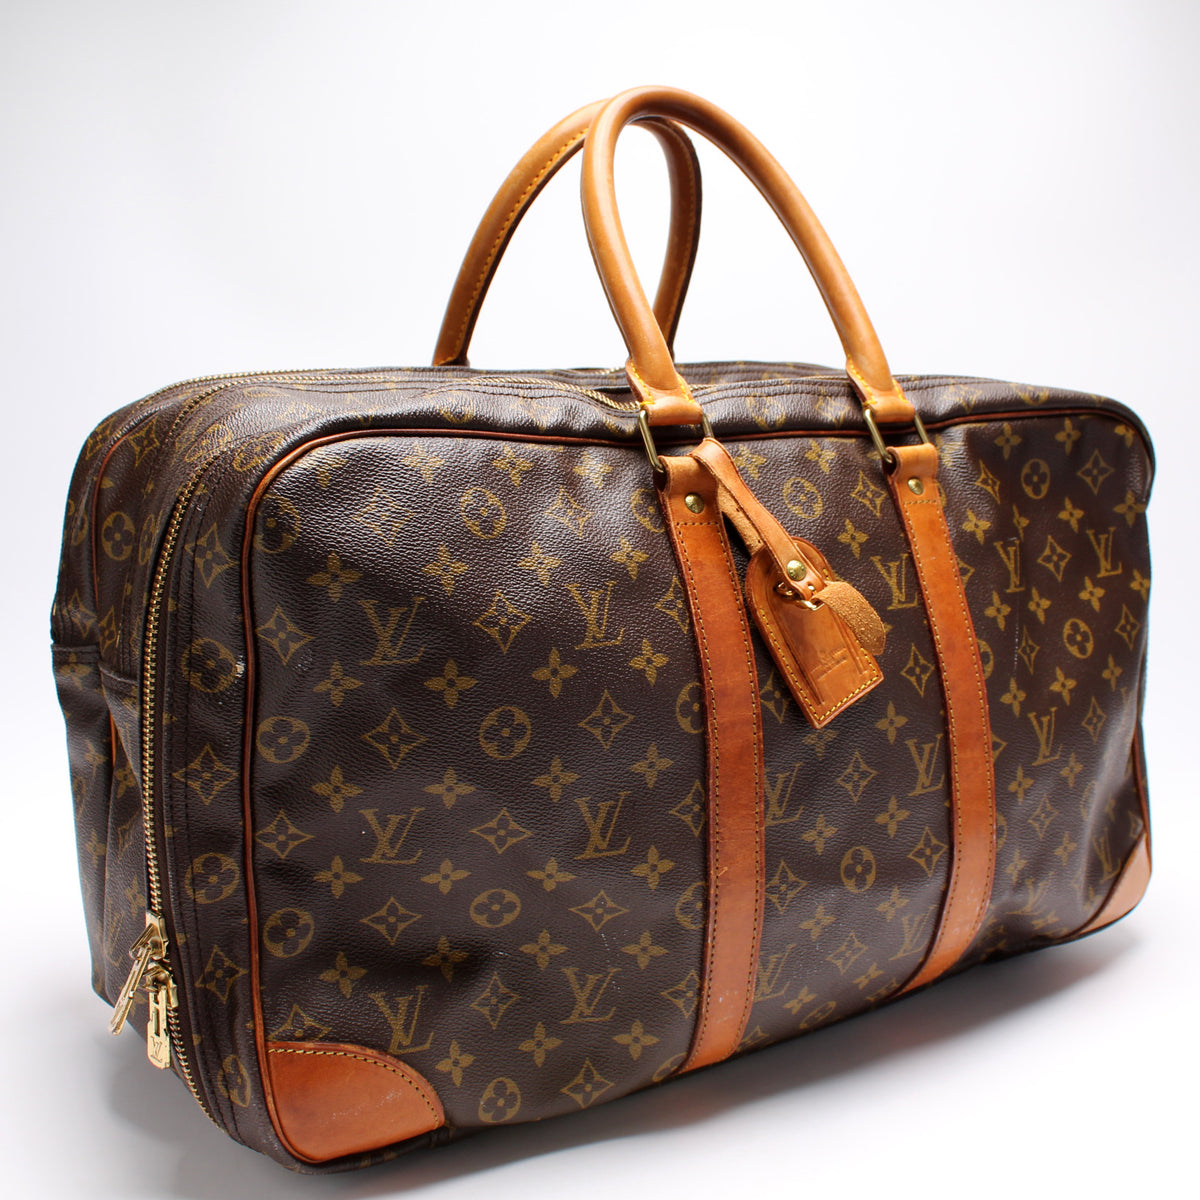 LOUIS VUITTON Sirius 50 Monogram Canvas Suitcase Travel Bag Brown-US